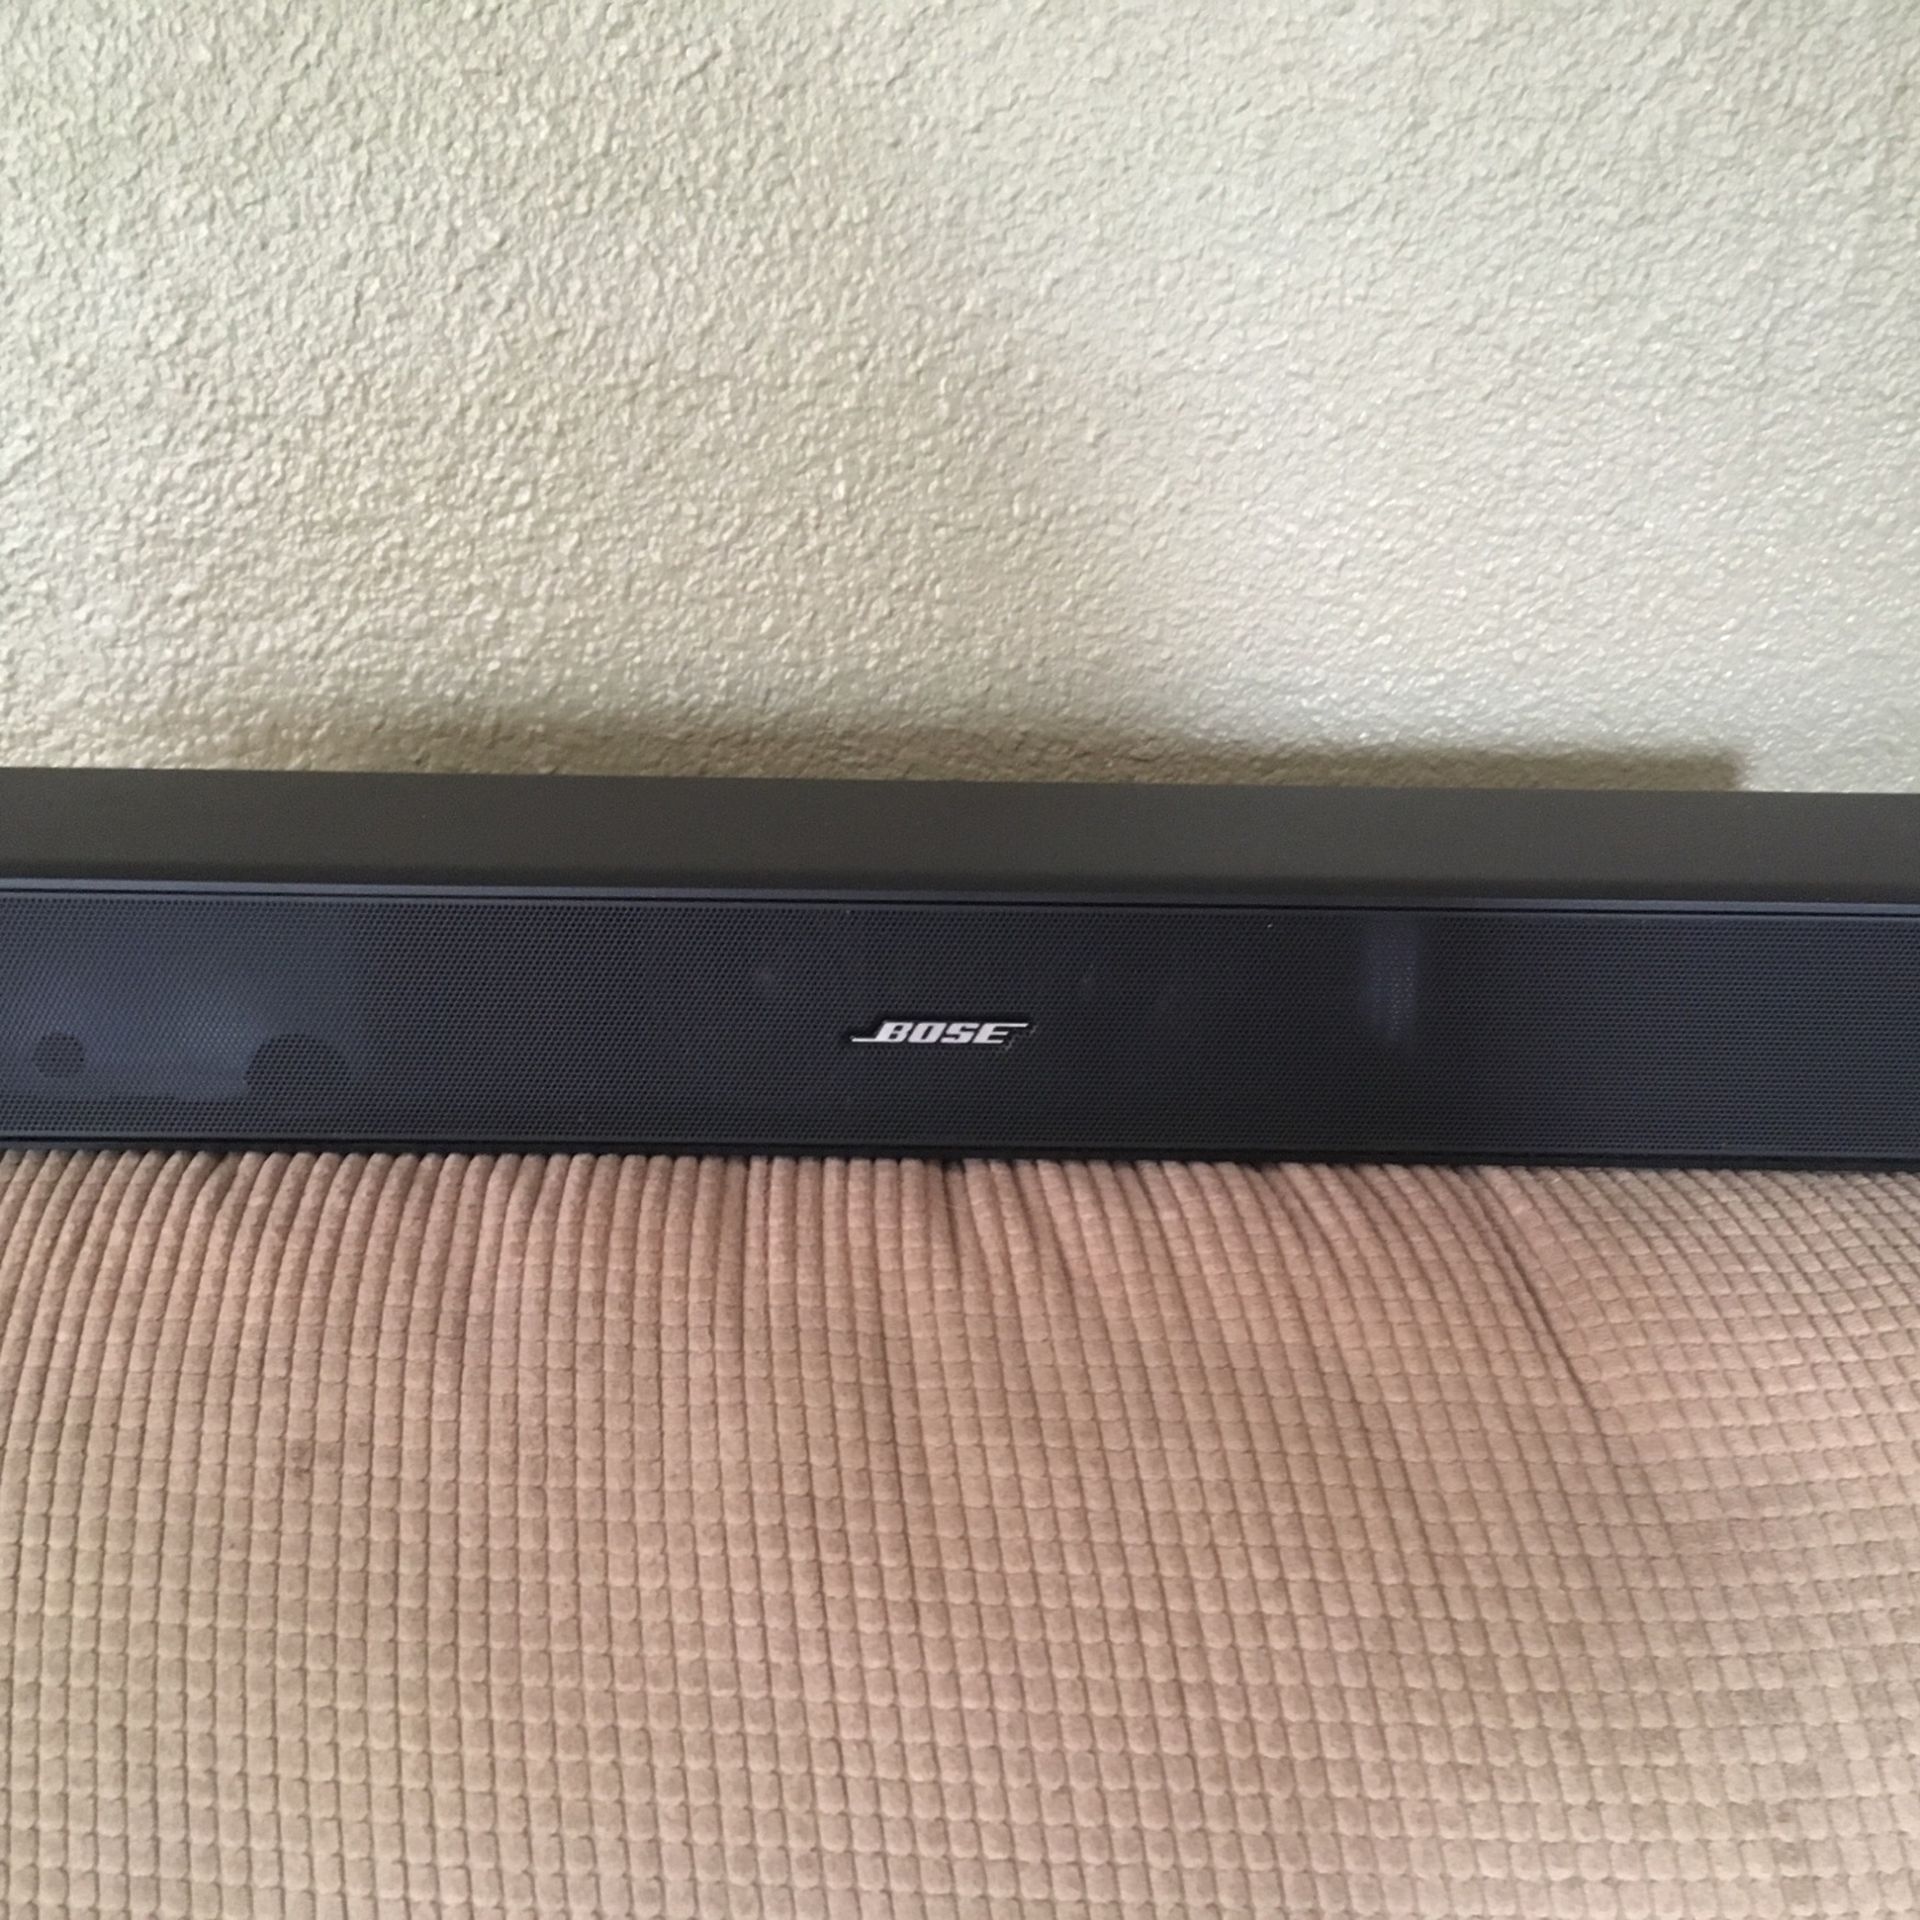 Bose Solo TV soundbar. As new condition. Purchased November 2017 for $242.